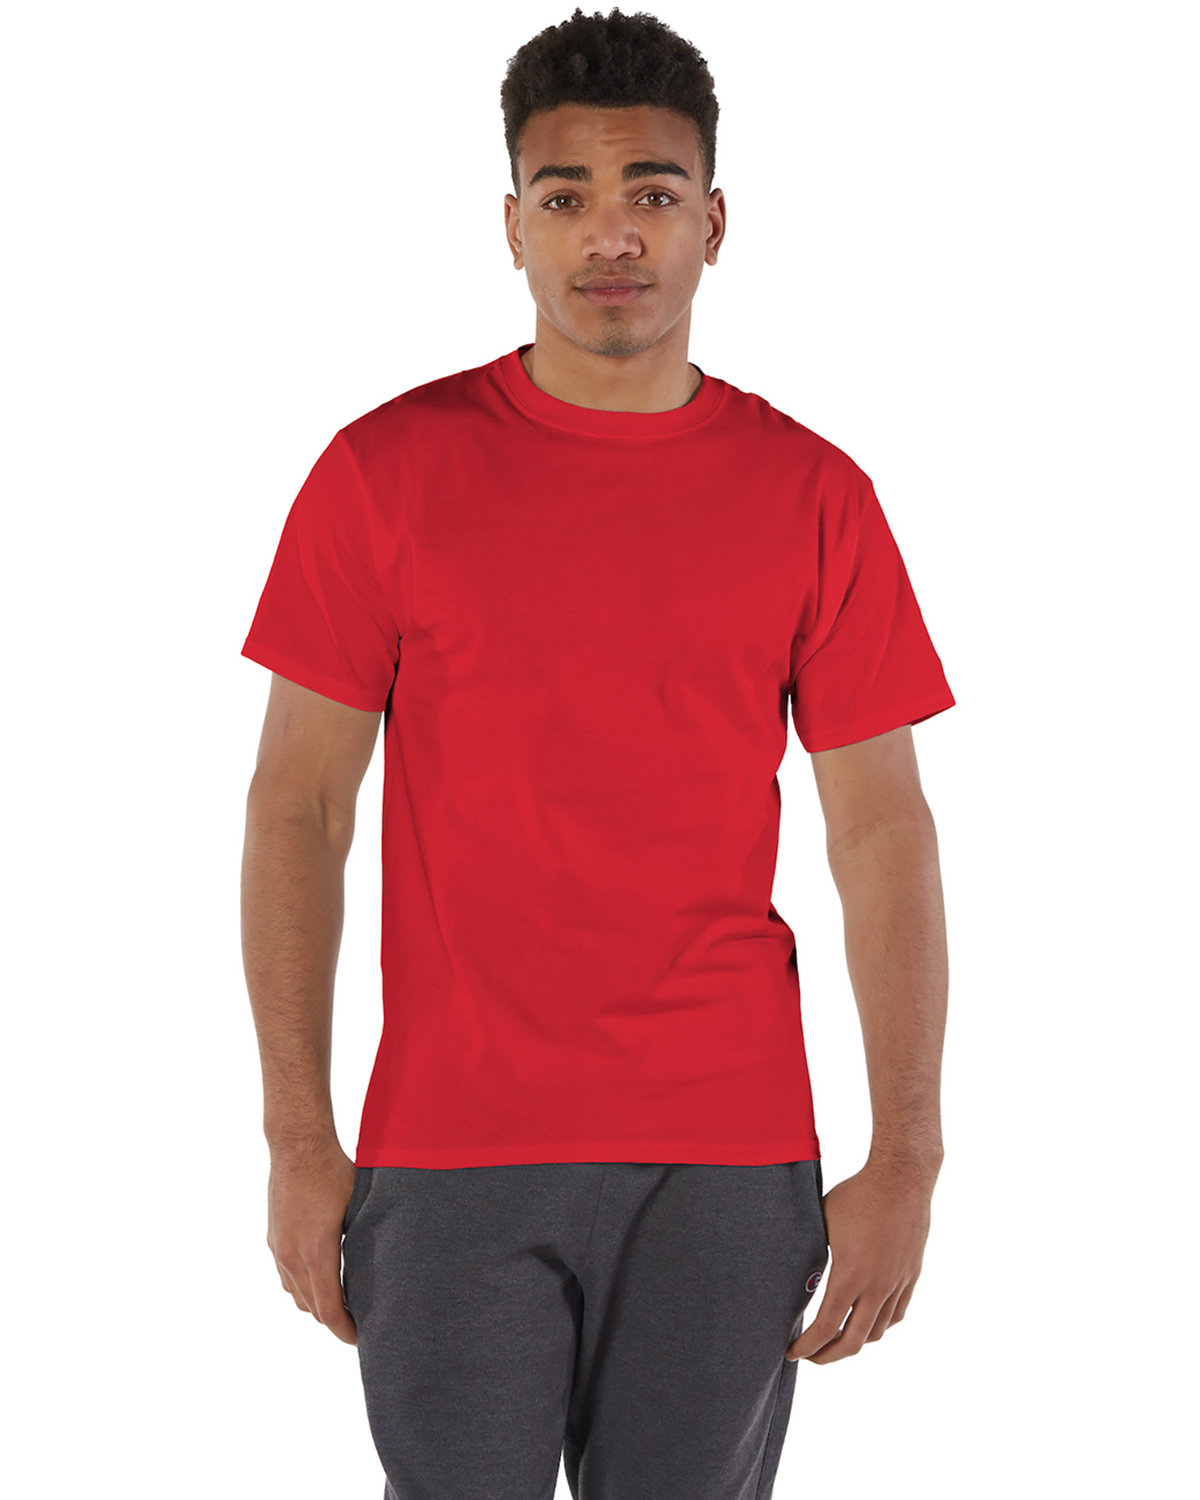 Champion Adult 6 oz. Short-Sleeve T-Shirt RED 